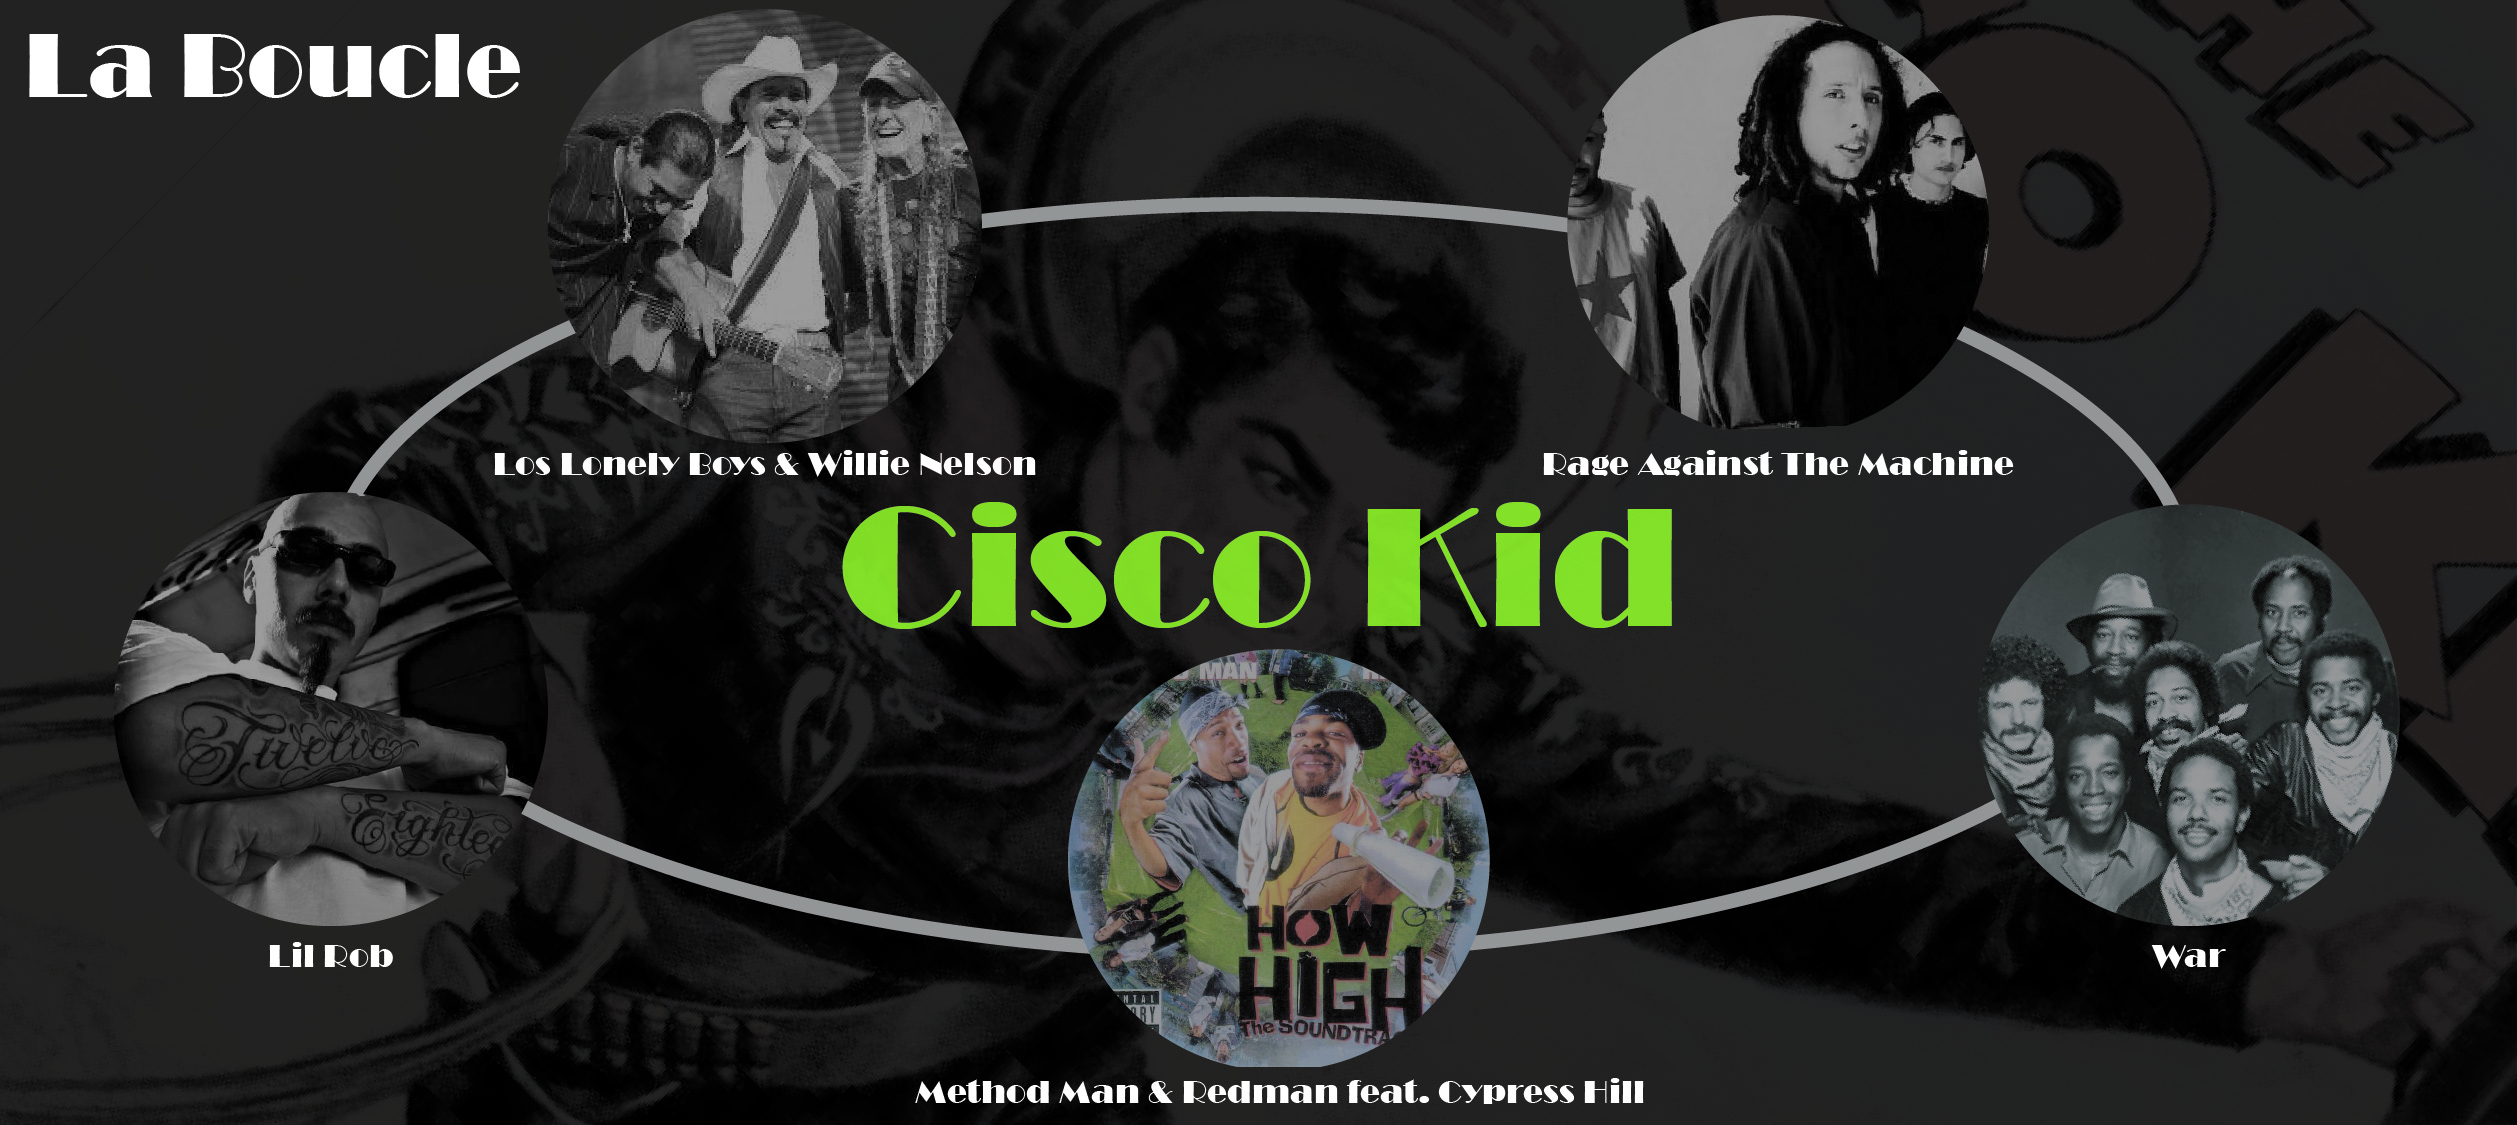 La Boucle – Cisco Kid